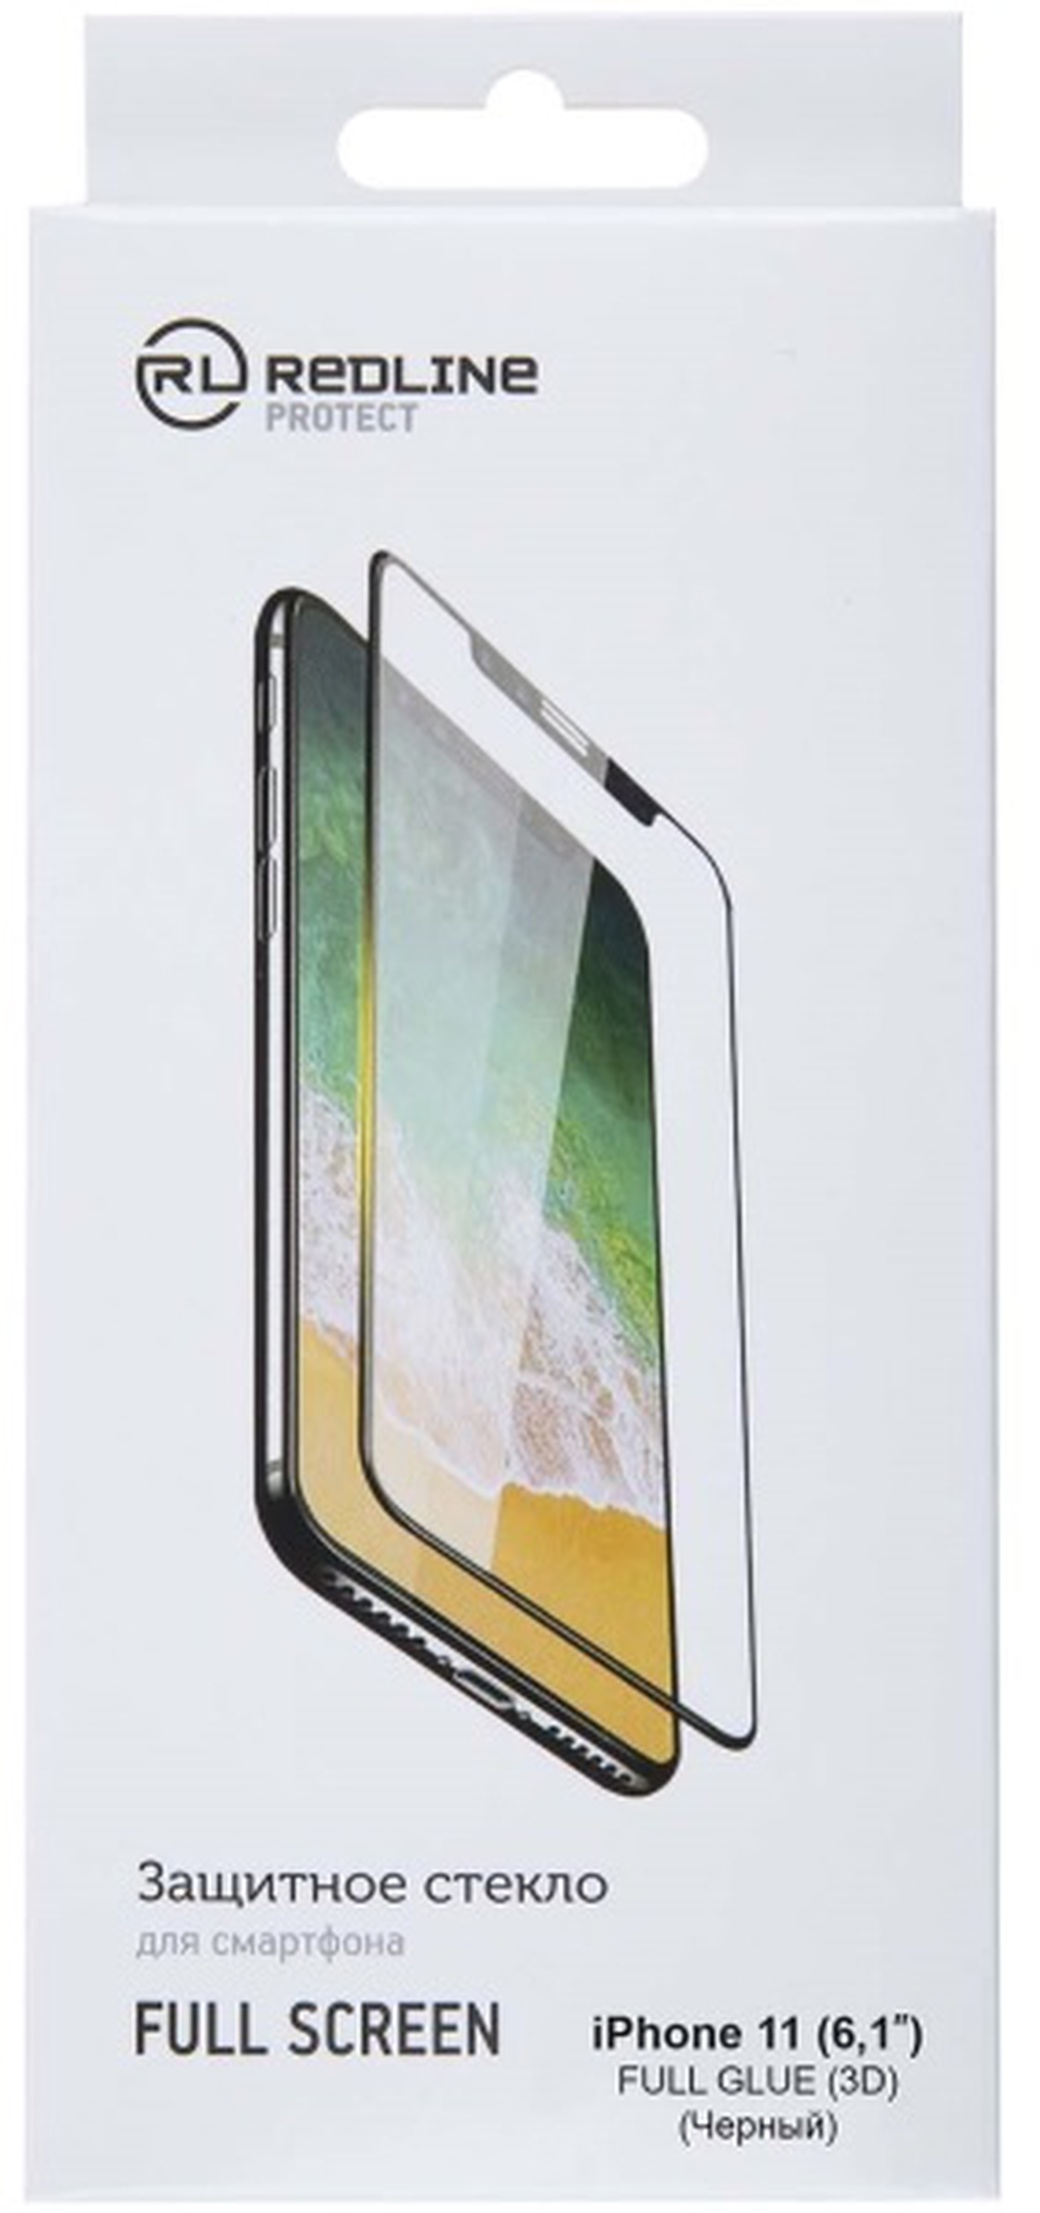 Защитное стекло для Apple iPhone 11 Full Screen Full Glue (3D) черный, Redline фото